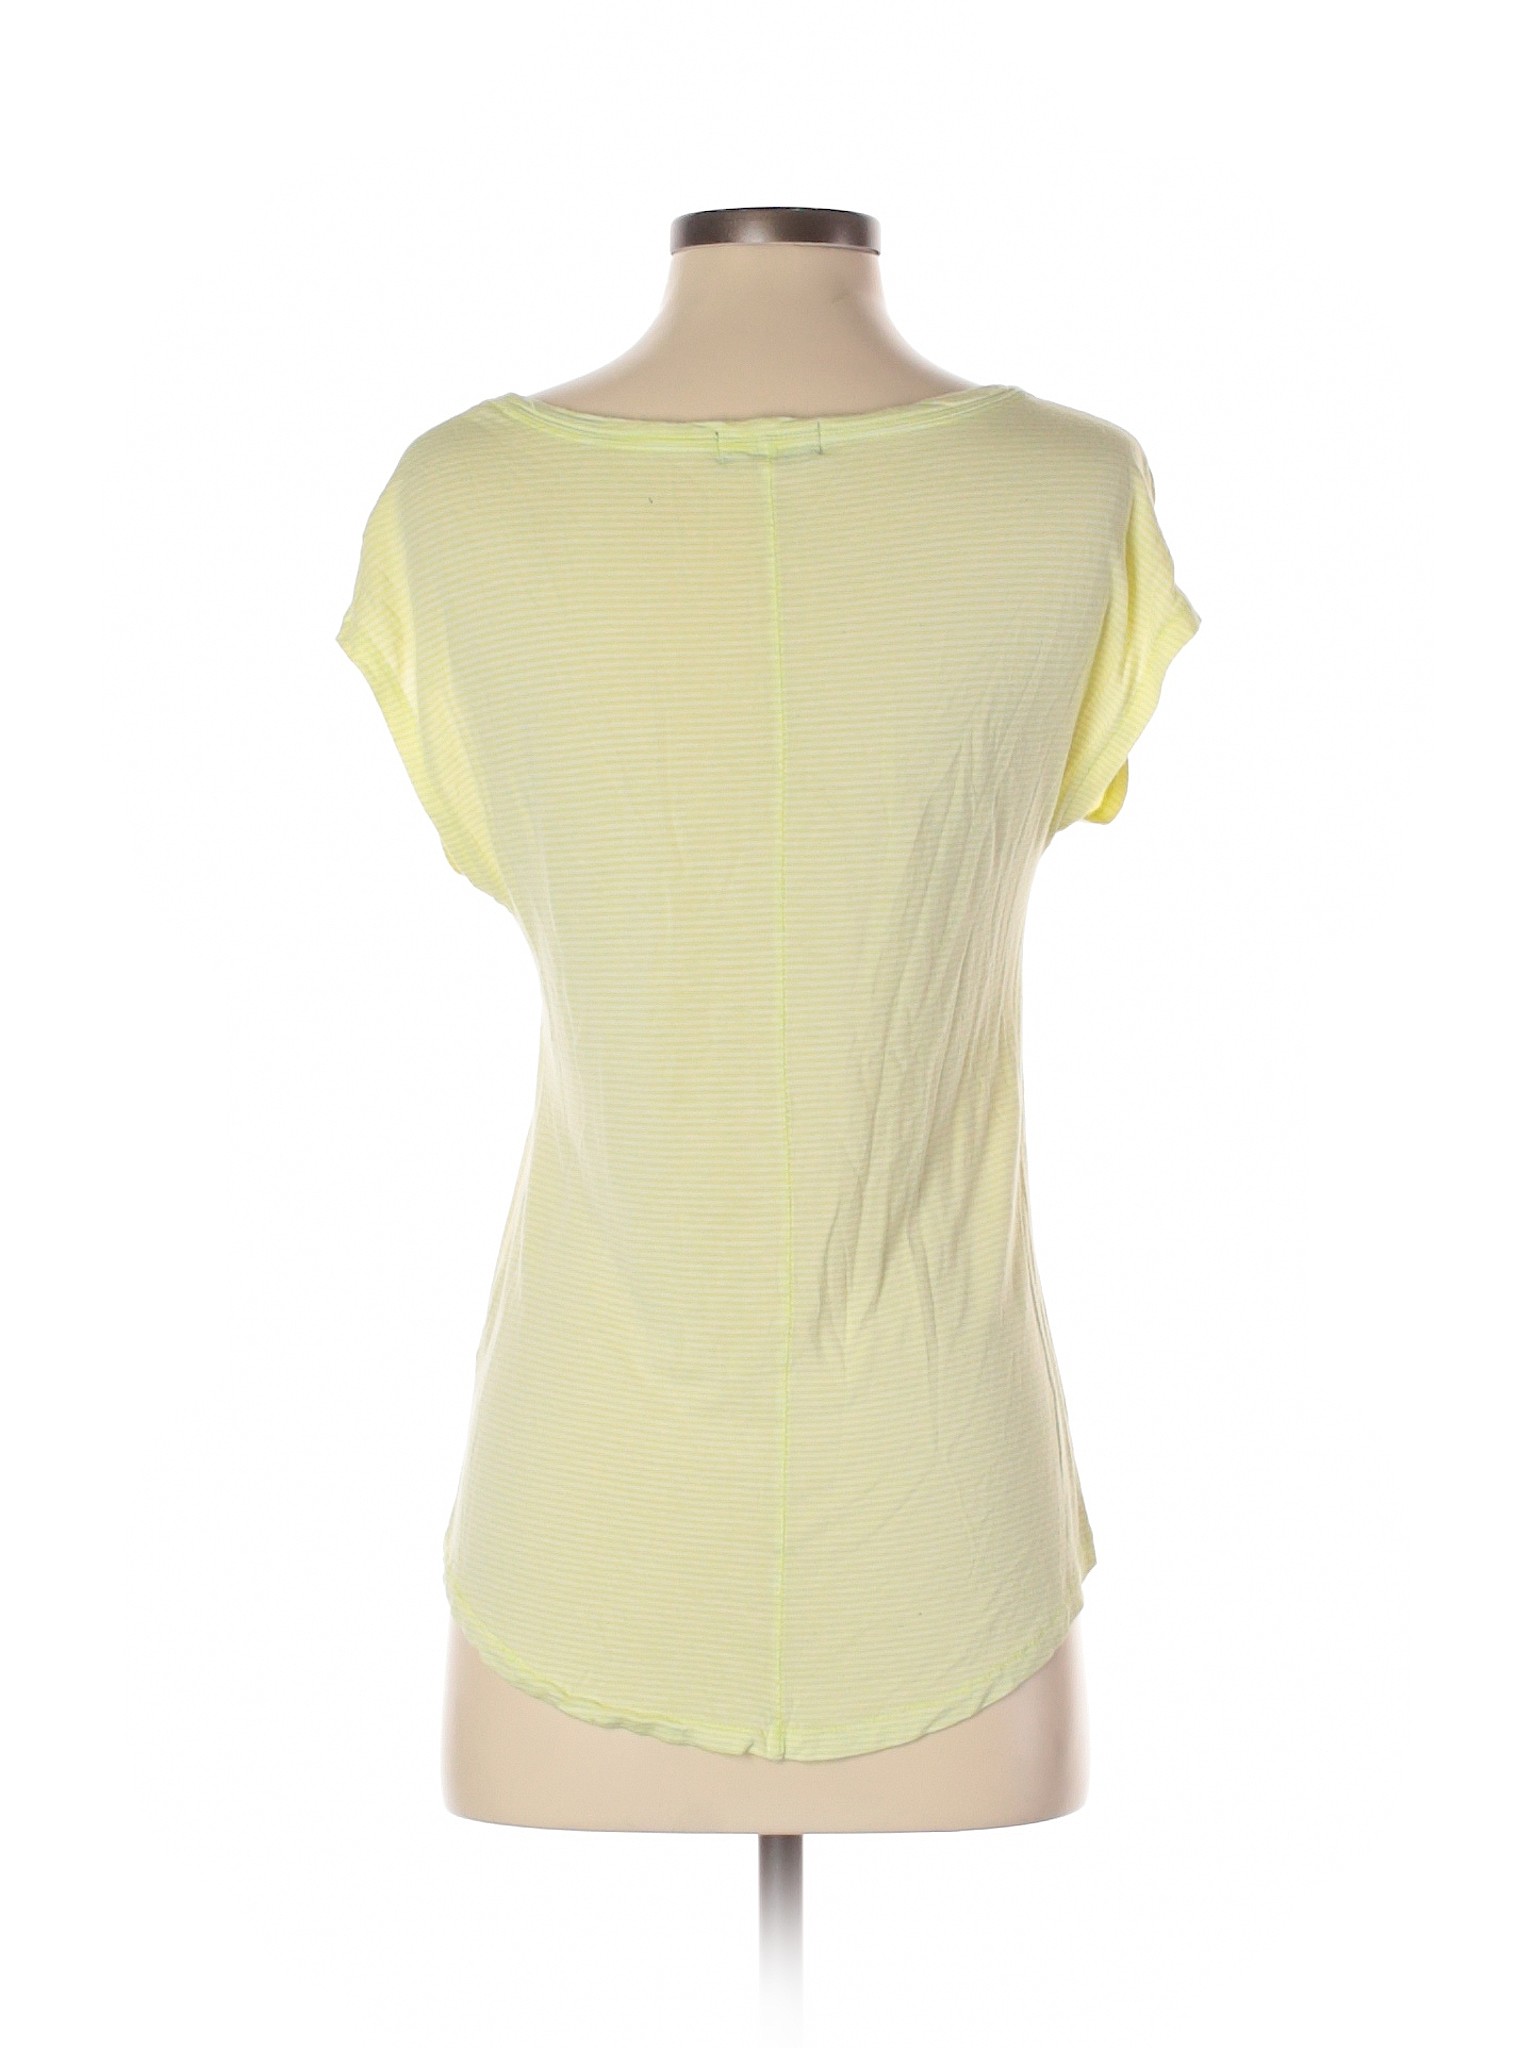 Gap Women Yellow Short Sleeve T-Shirt XS | eBay